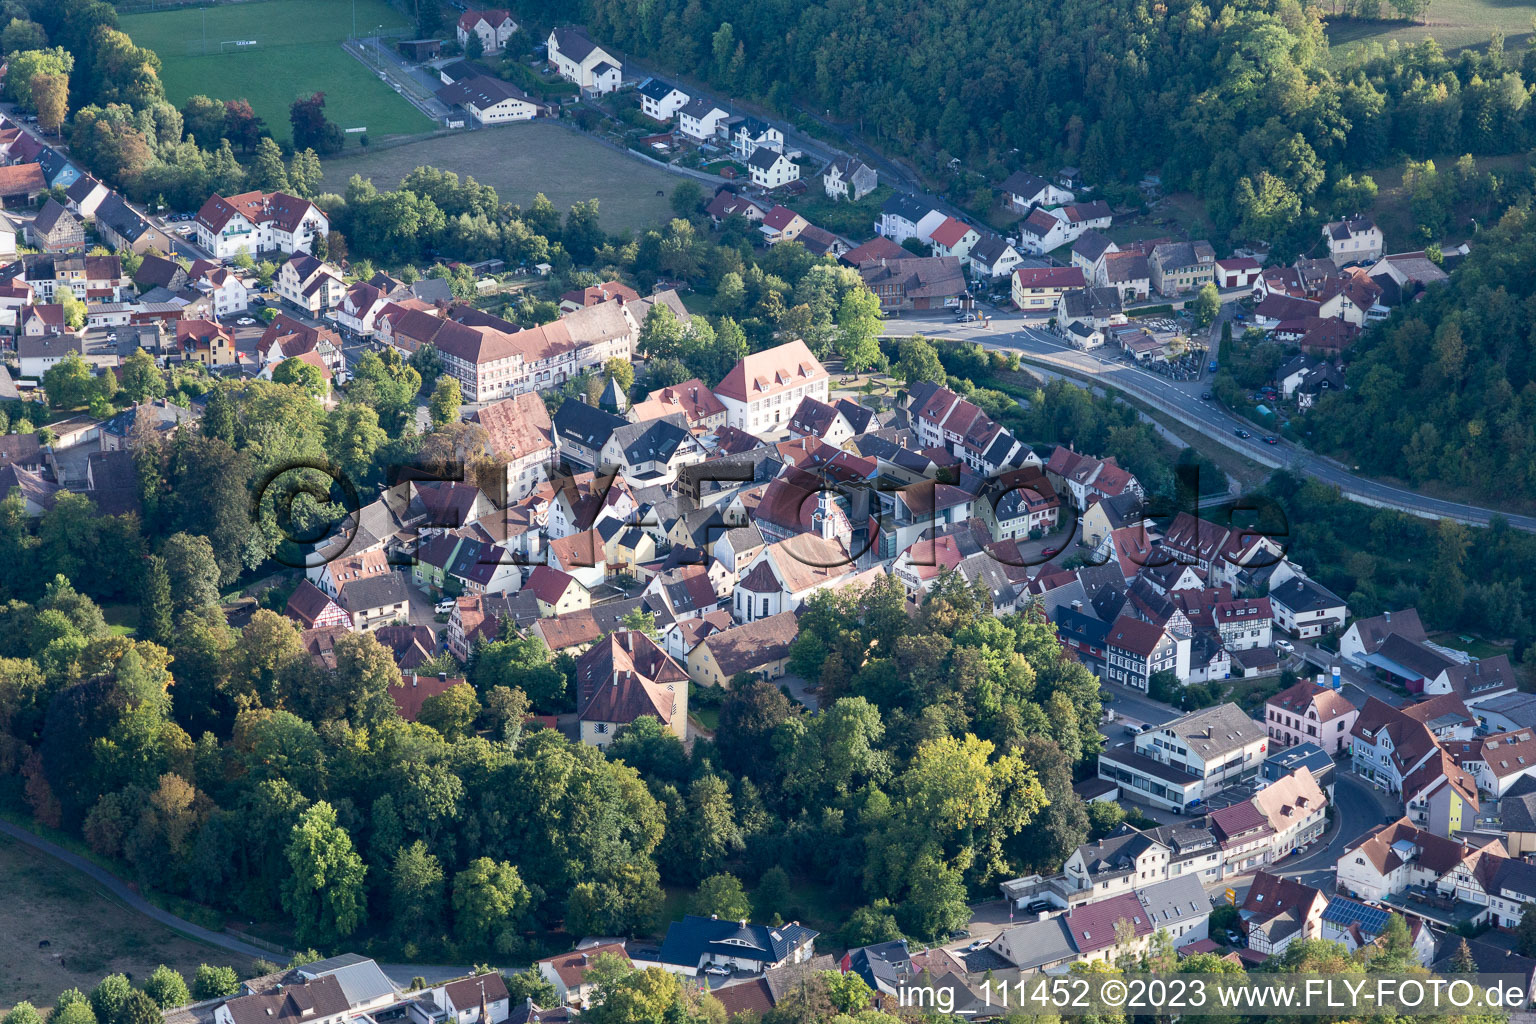 Adelsheim dans le département Bade-Wurtemberg, Allemagne hors des airs